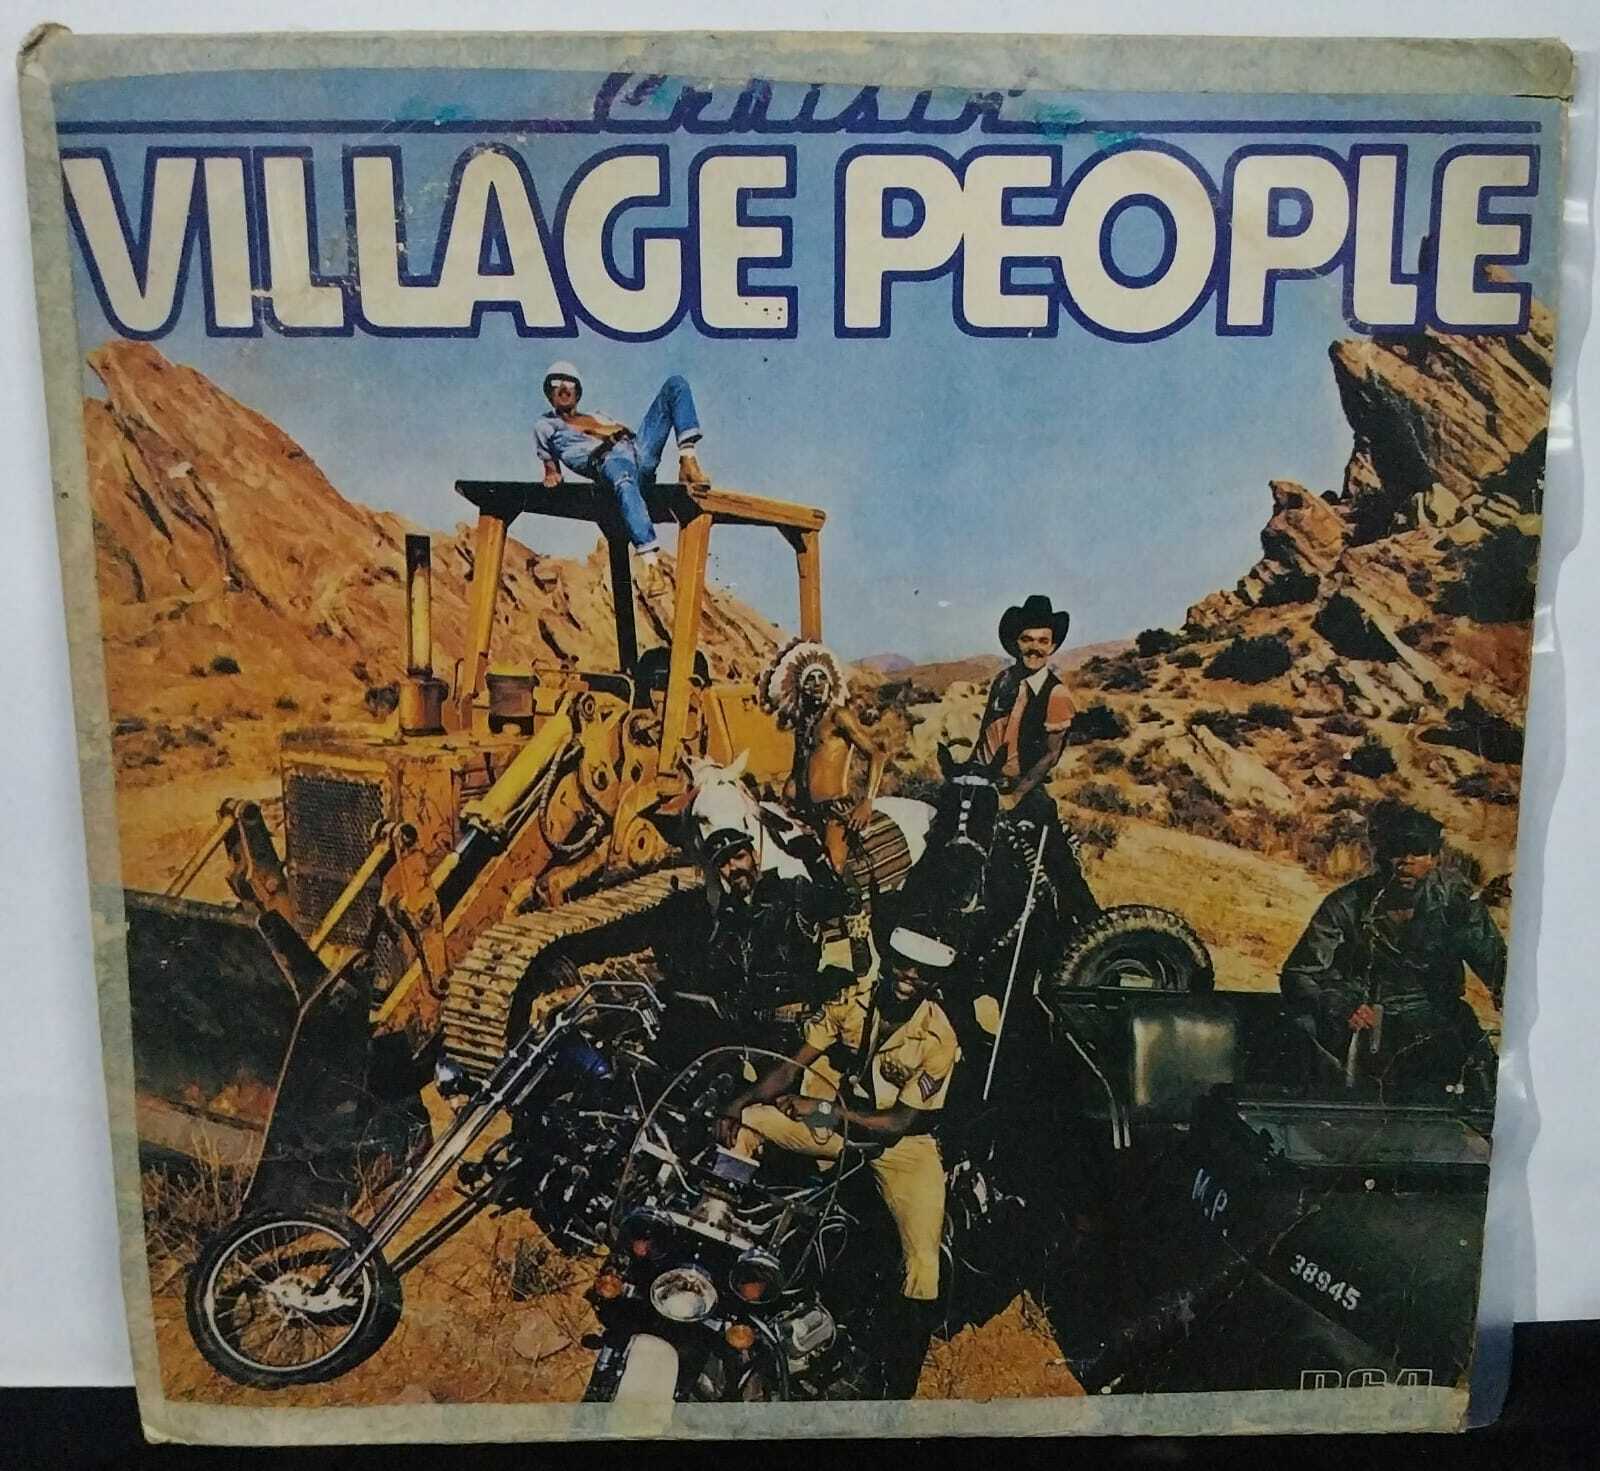 Vinil - Village People - Cruisin